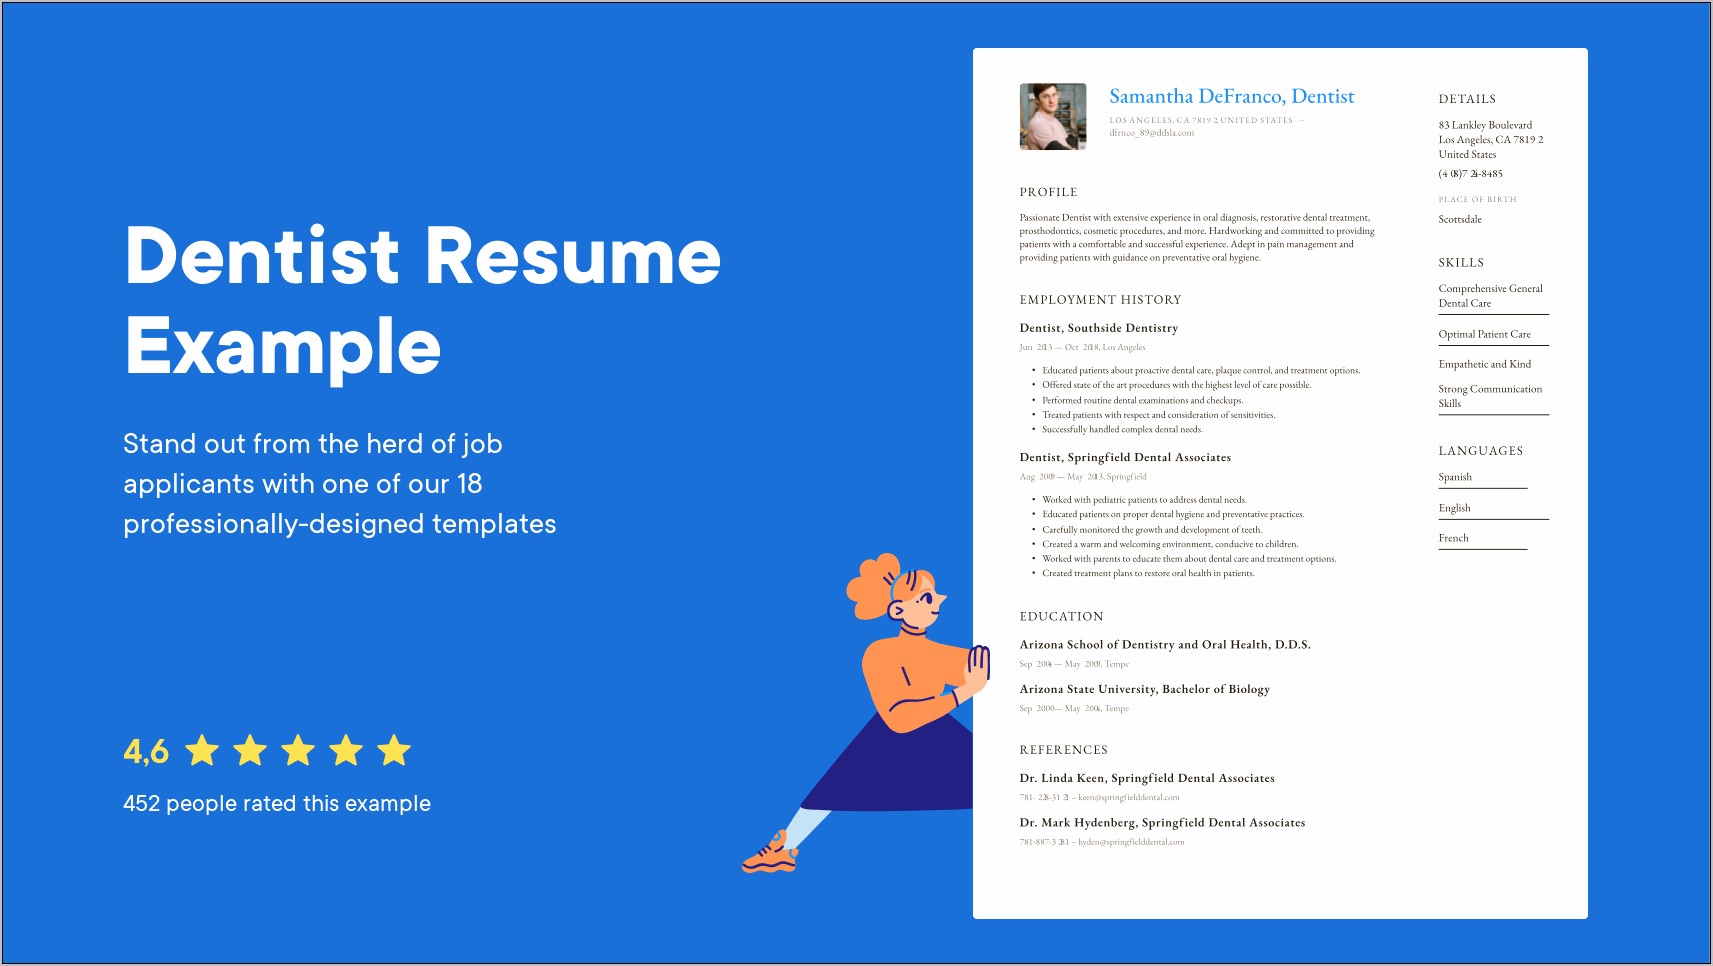 Sample Resume For Dds Application